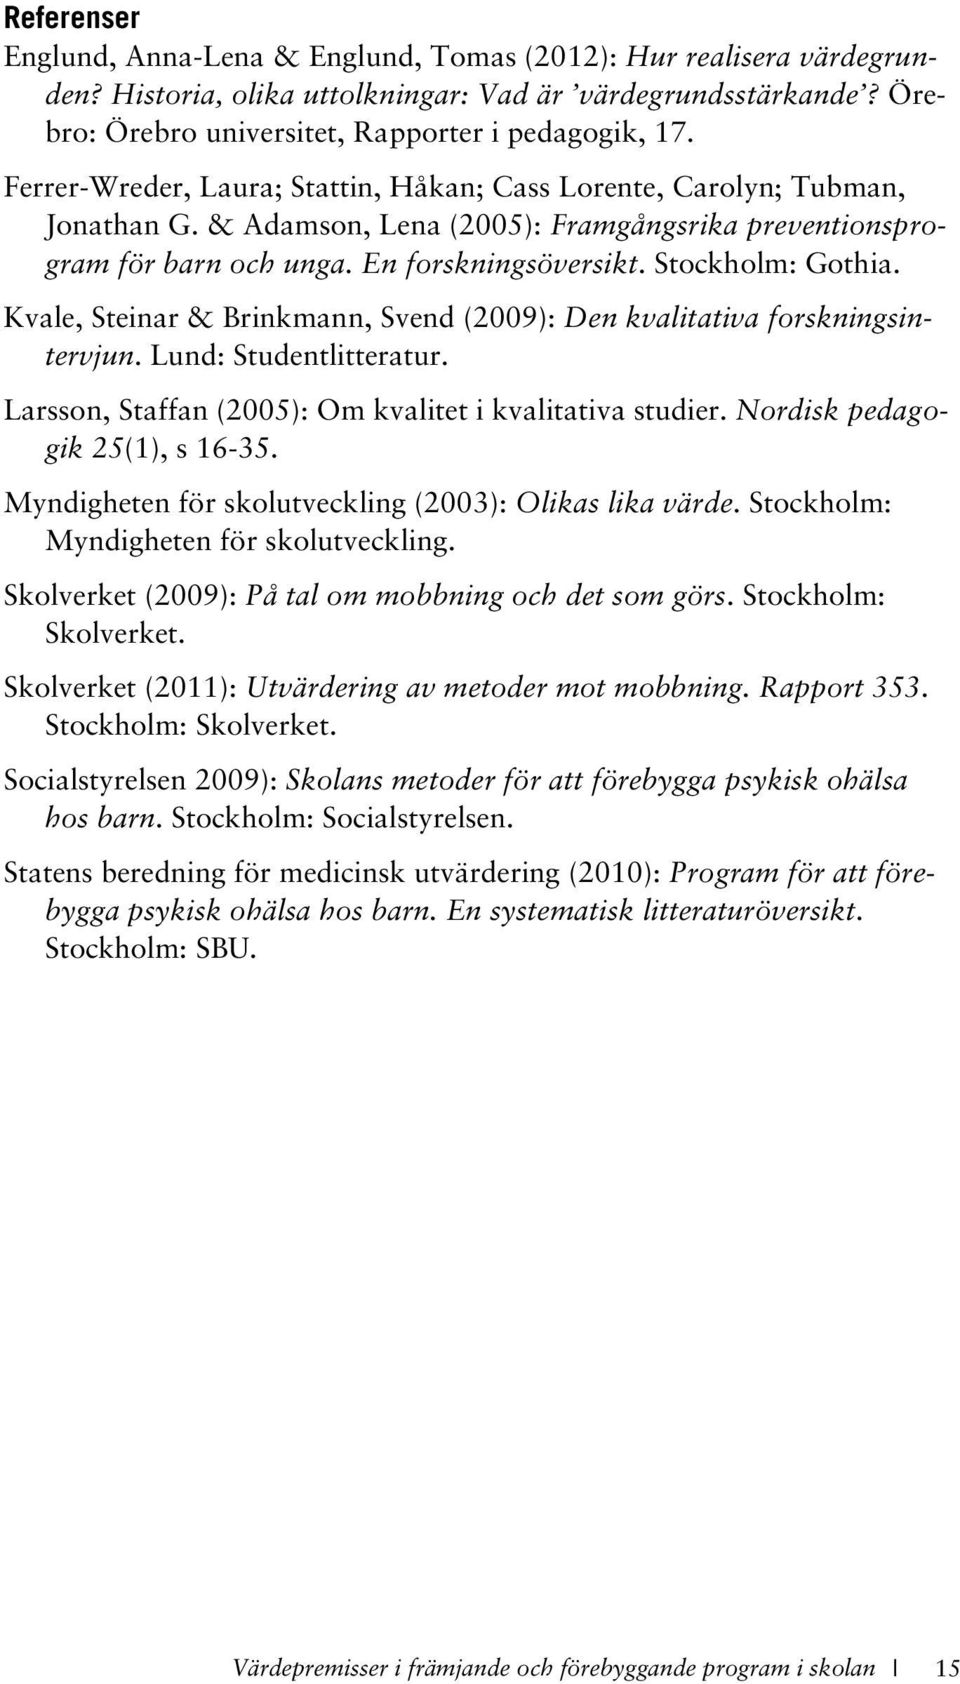 Kvale, Steinar & Brinkmann, Svend (2009): Den kvalitativa forskningsintervjun. Lund: Studentlitteratur. Larsson, Staffan (2005): Om kvalitet i kvalitativa studier. Nordisk pedagogik 25(1), s 16-35.